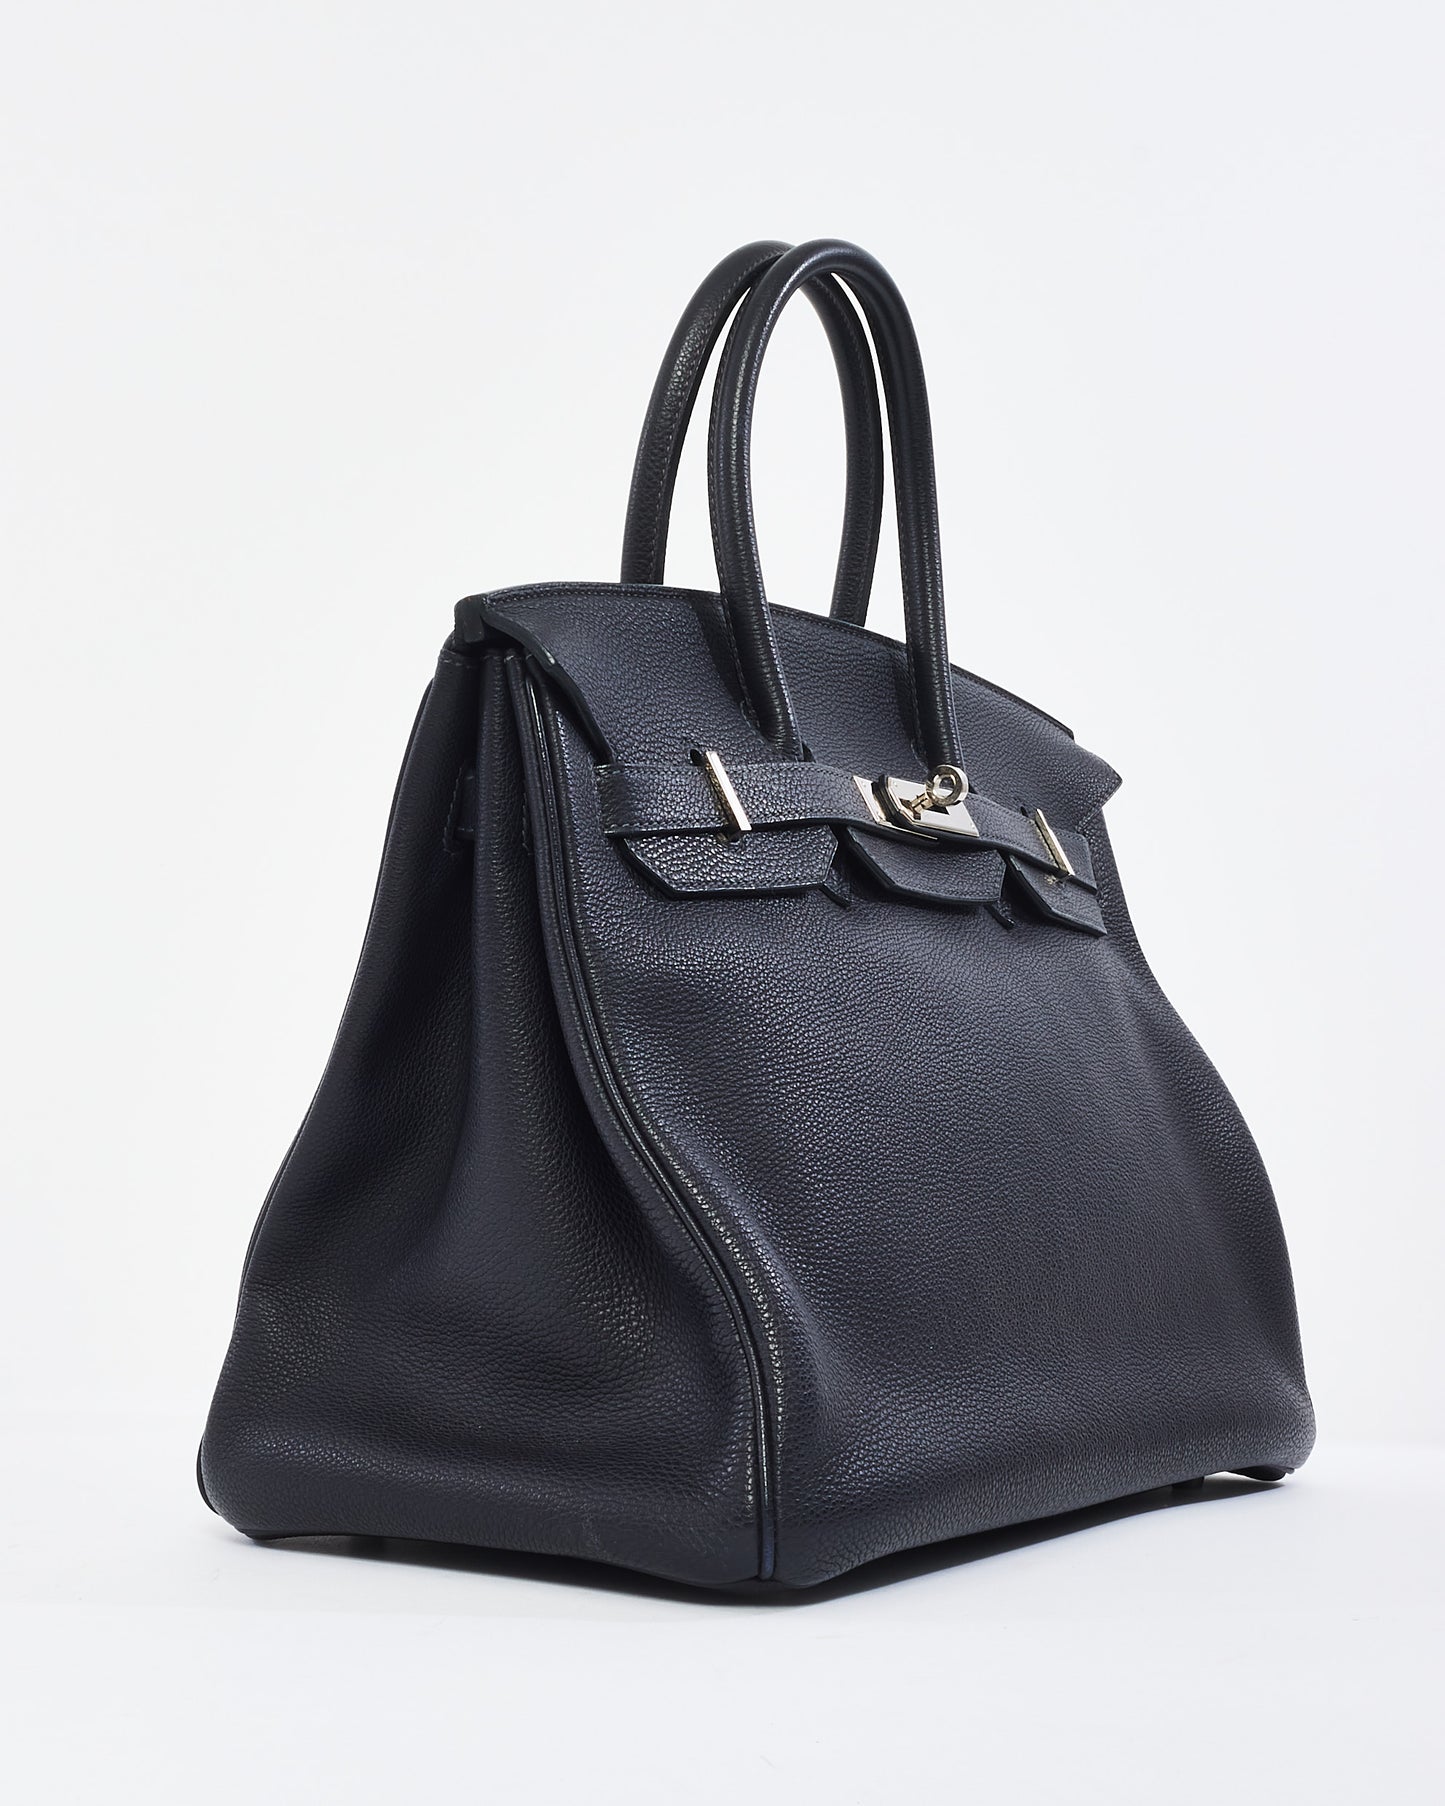 Hermès Bleu Nuit Togo Leather Birkin 35 with Palladium Hardware